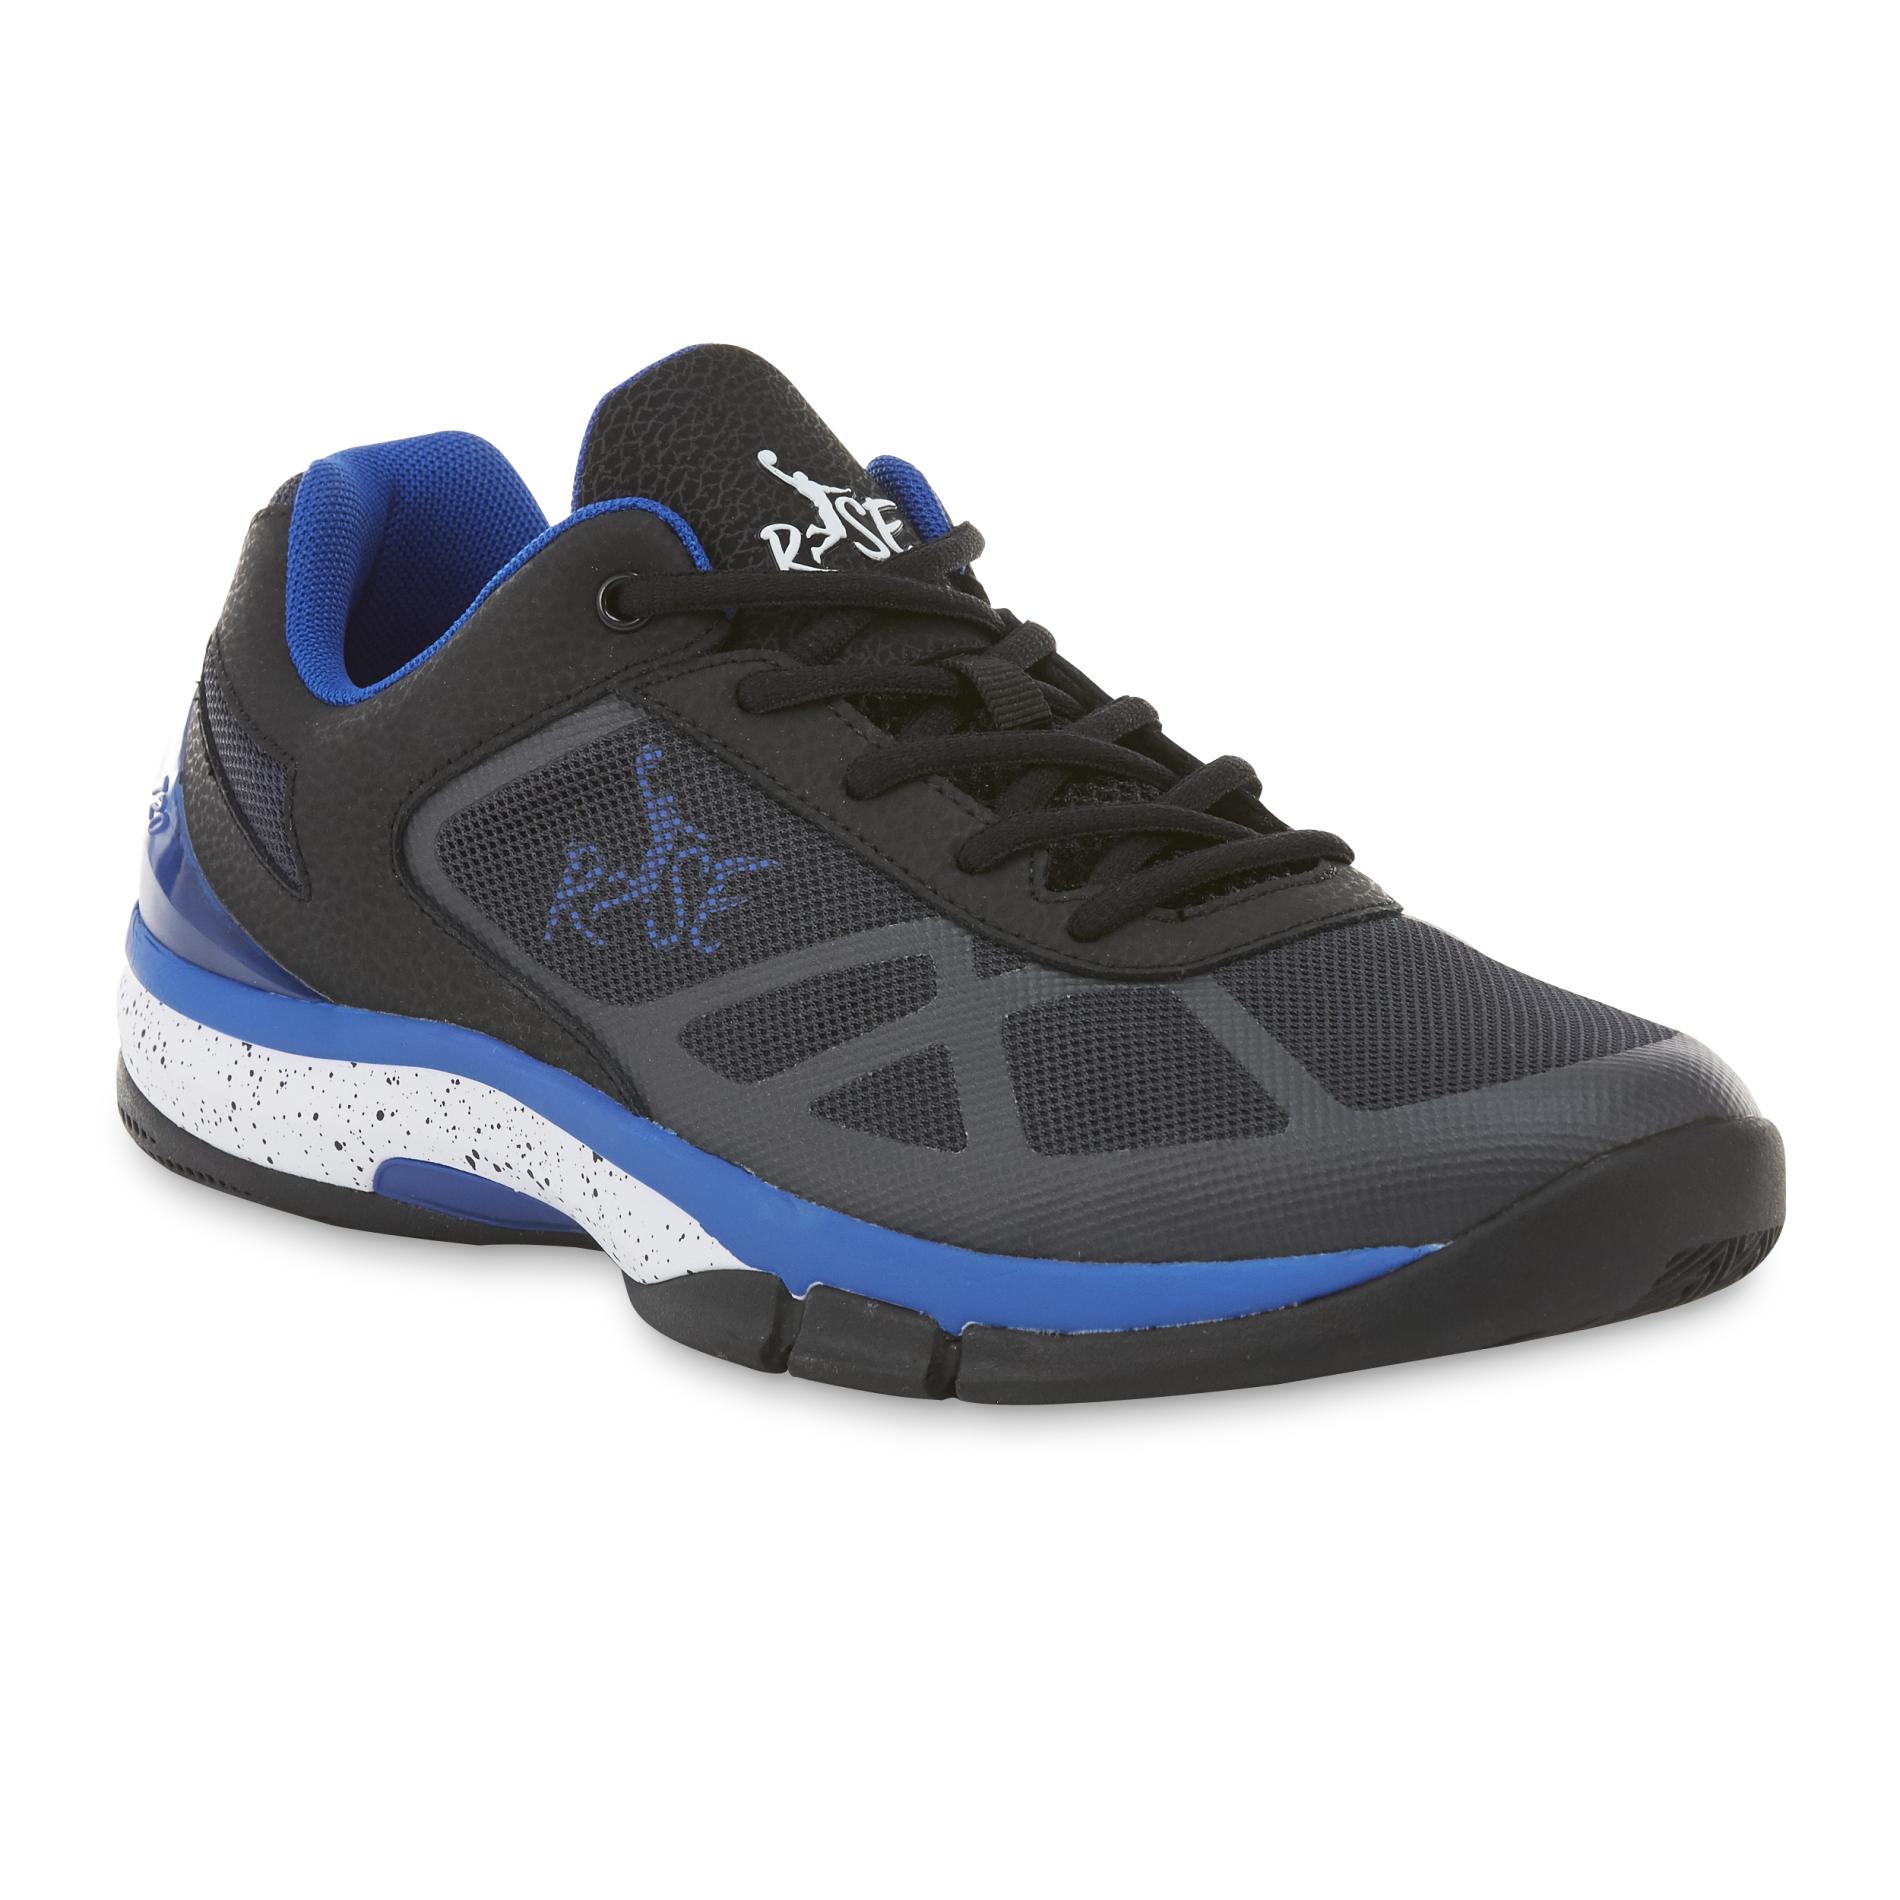 Risewear Men's Halo II Low Athletic Shoe - Black/Blue/White